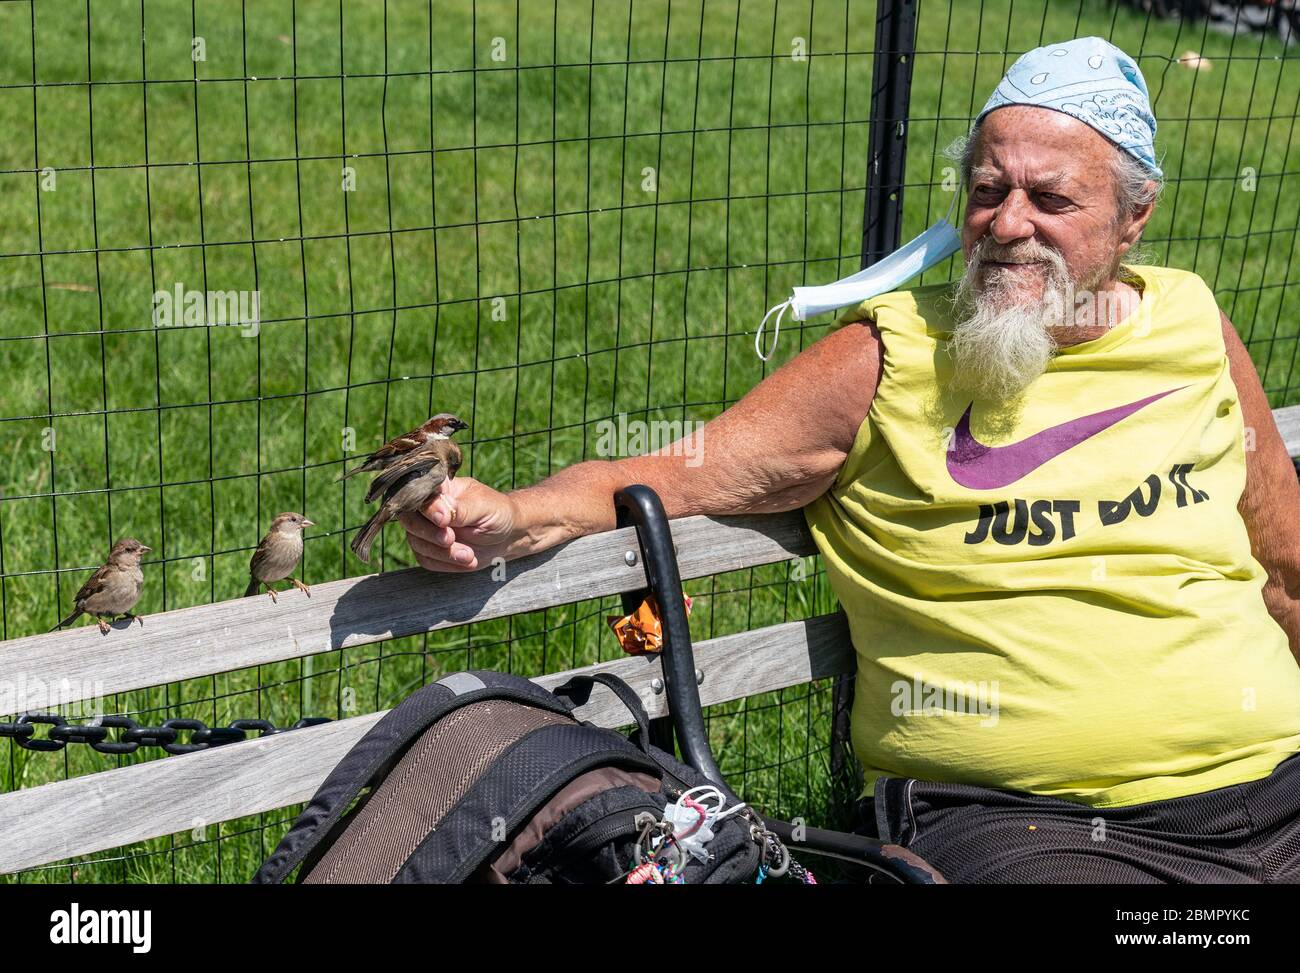 New York, NY - May 10, 2020: A man named Ronnie feed sparrows and enjoys sunny day amid COVID-19 pandemic in Washington Square Park Stock Photo